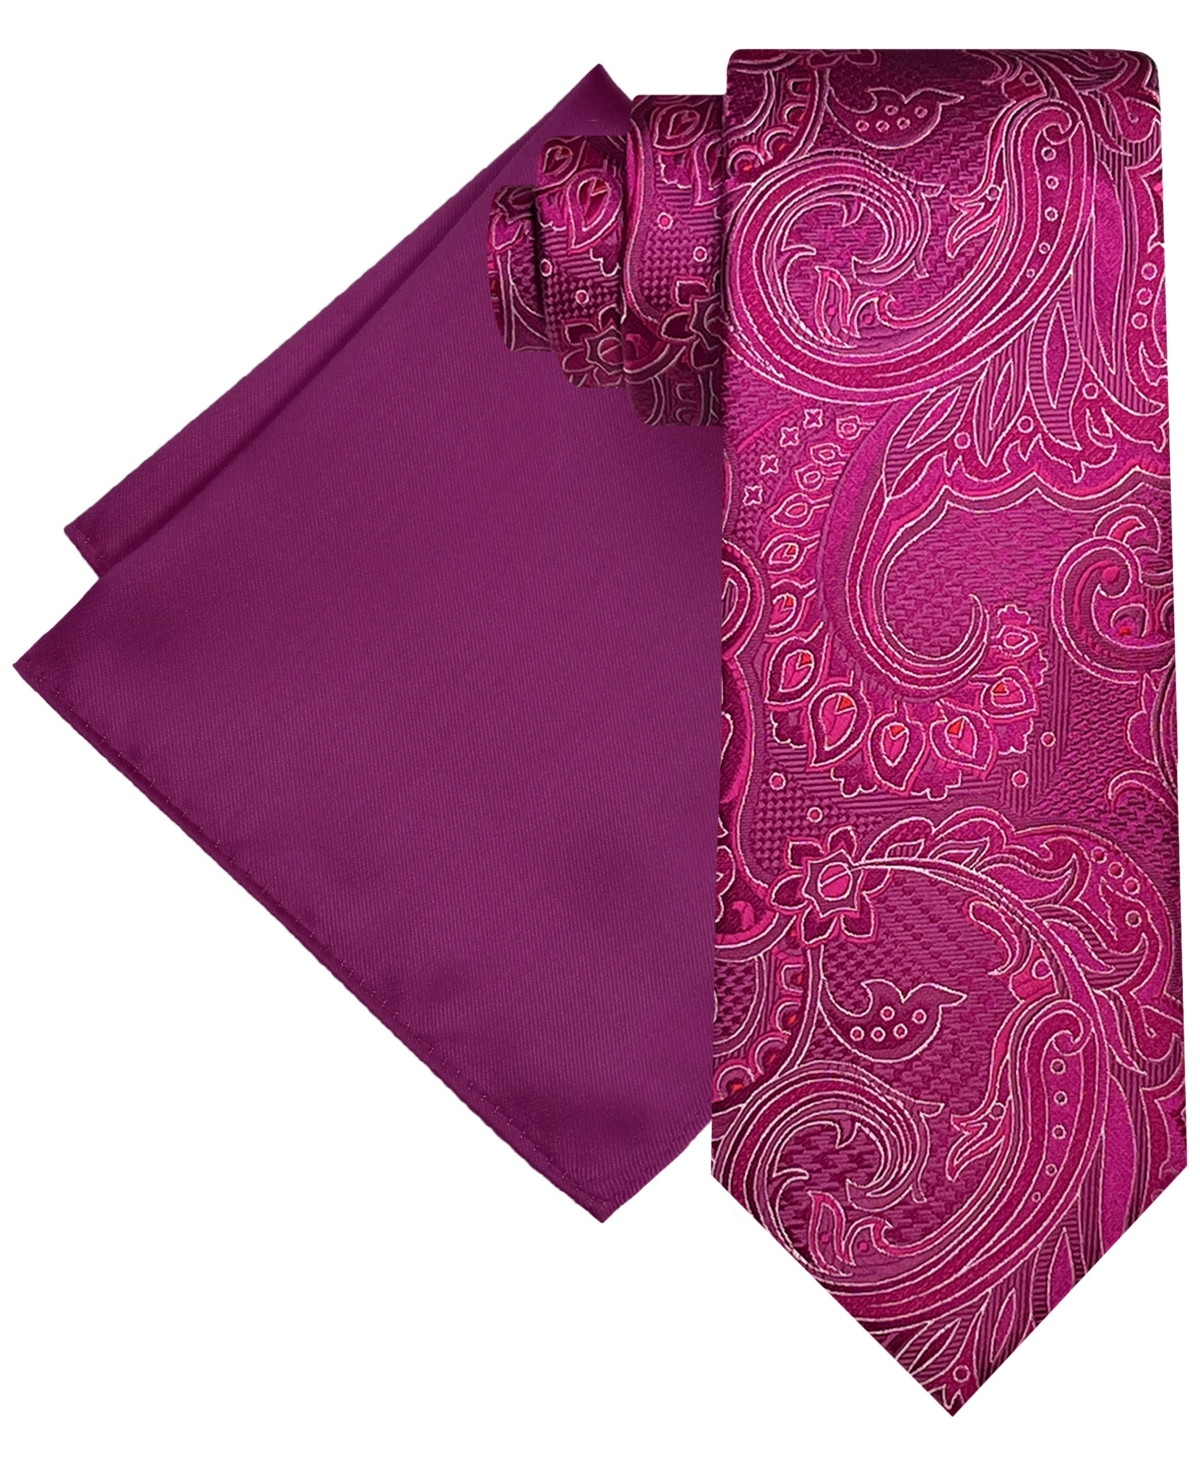 Men's Paisley Tie & Solid Pocket Square Set - Hot Pink